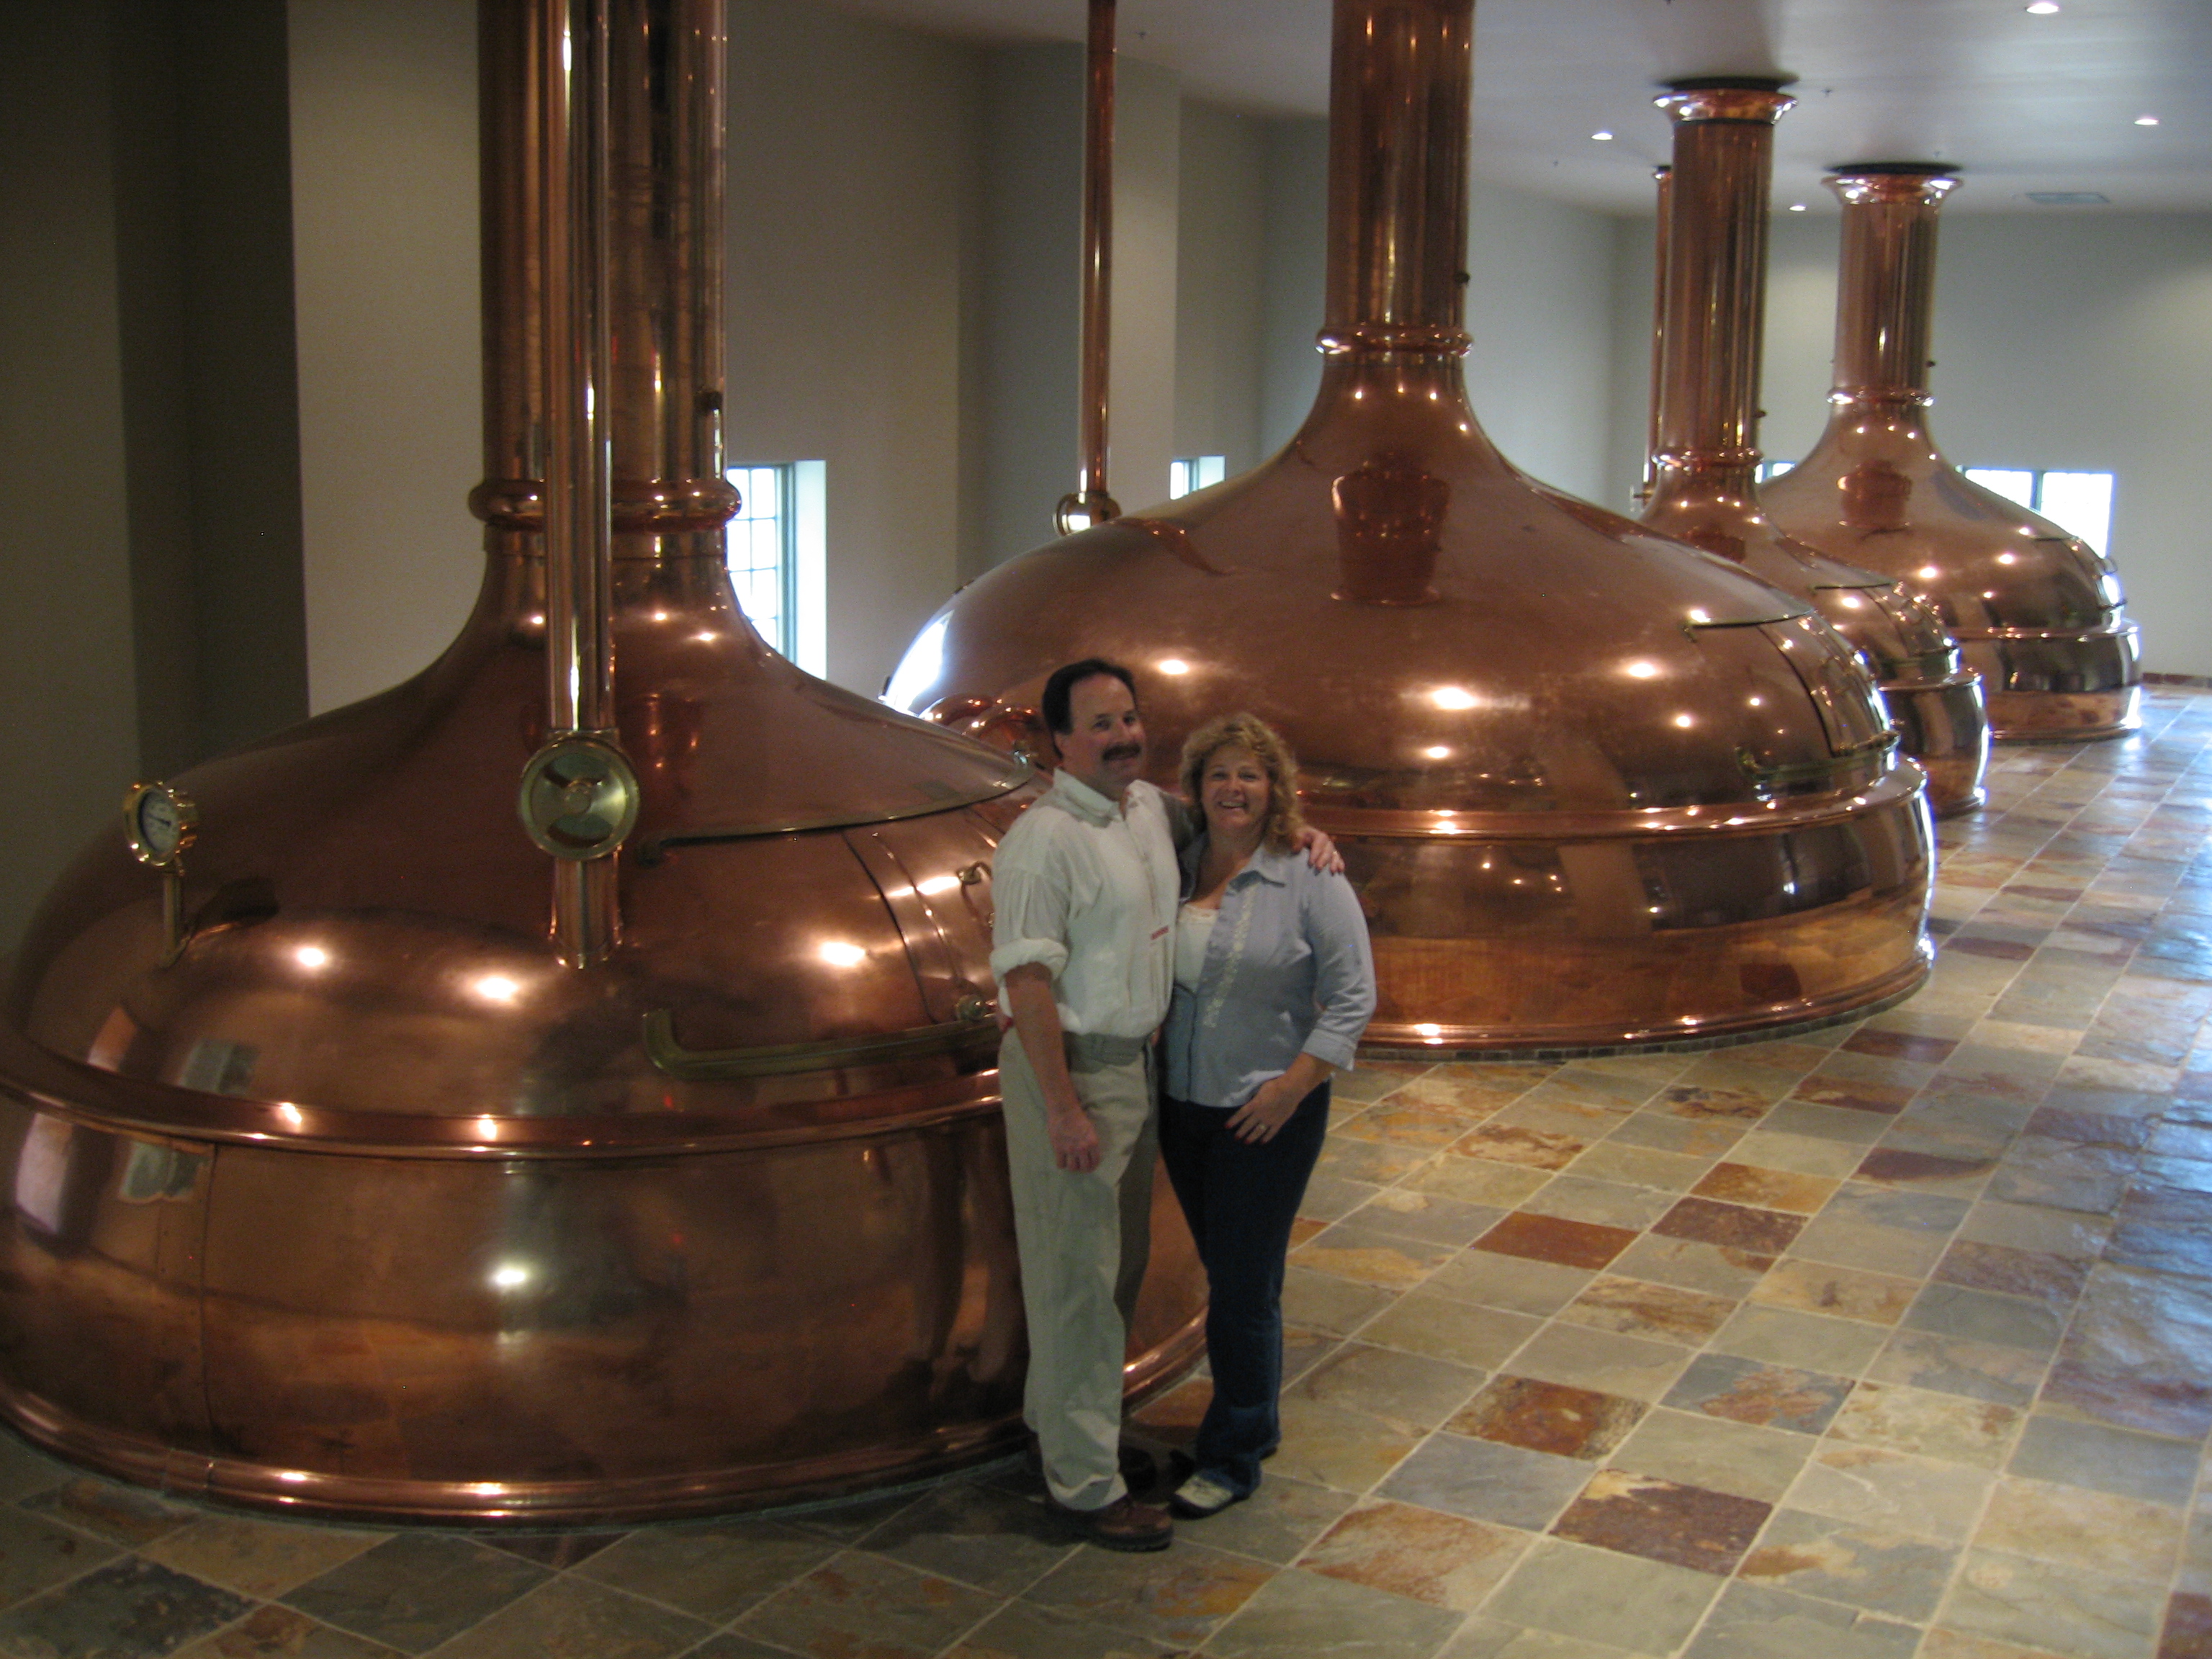 Deb and Dan Carey of New Glarus Brewing Company